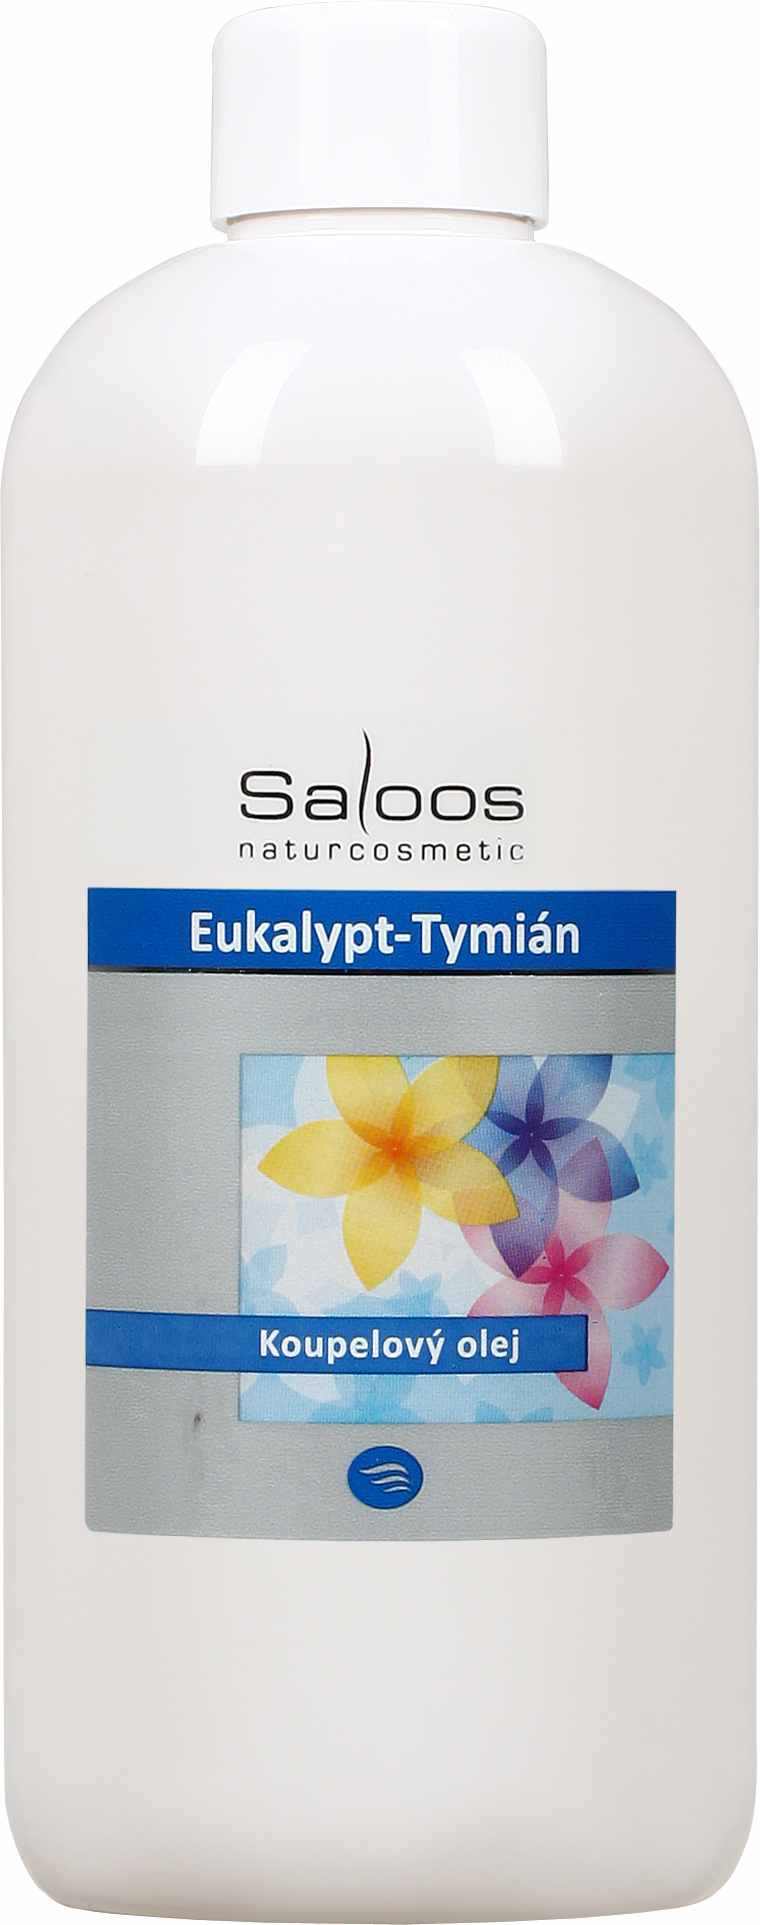 Saloos Eukalypt–Tymián - koupelový olej Balení: 500 ml